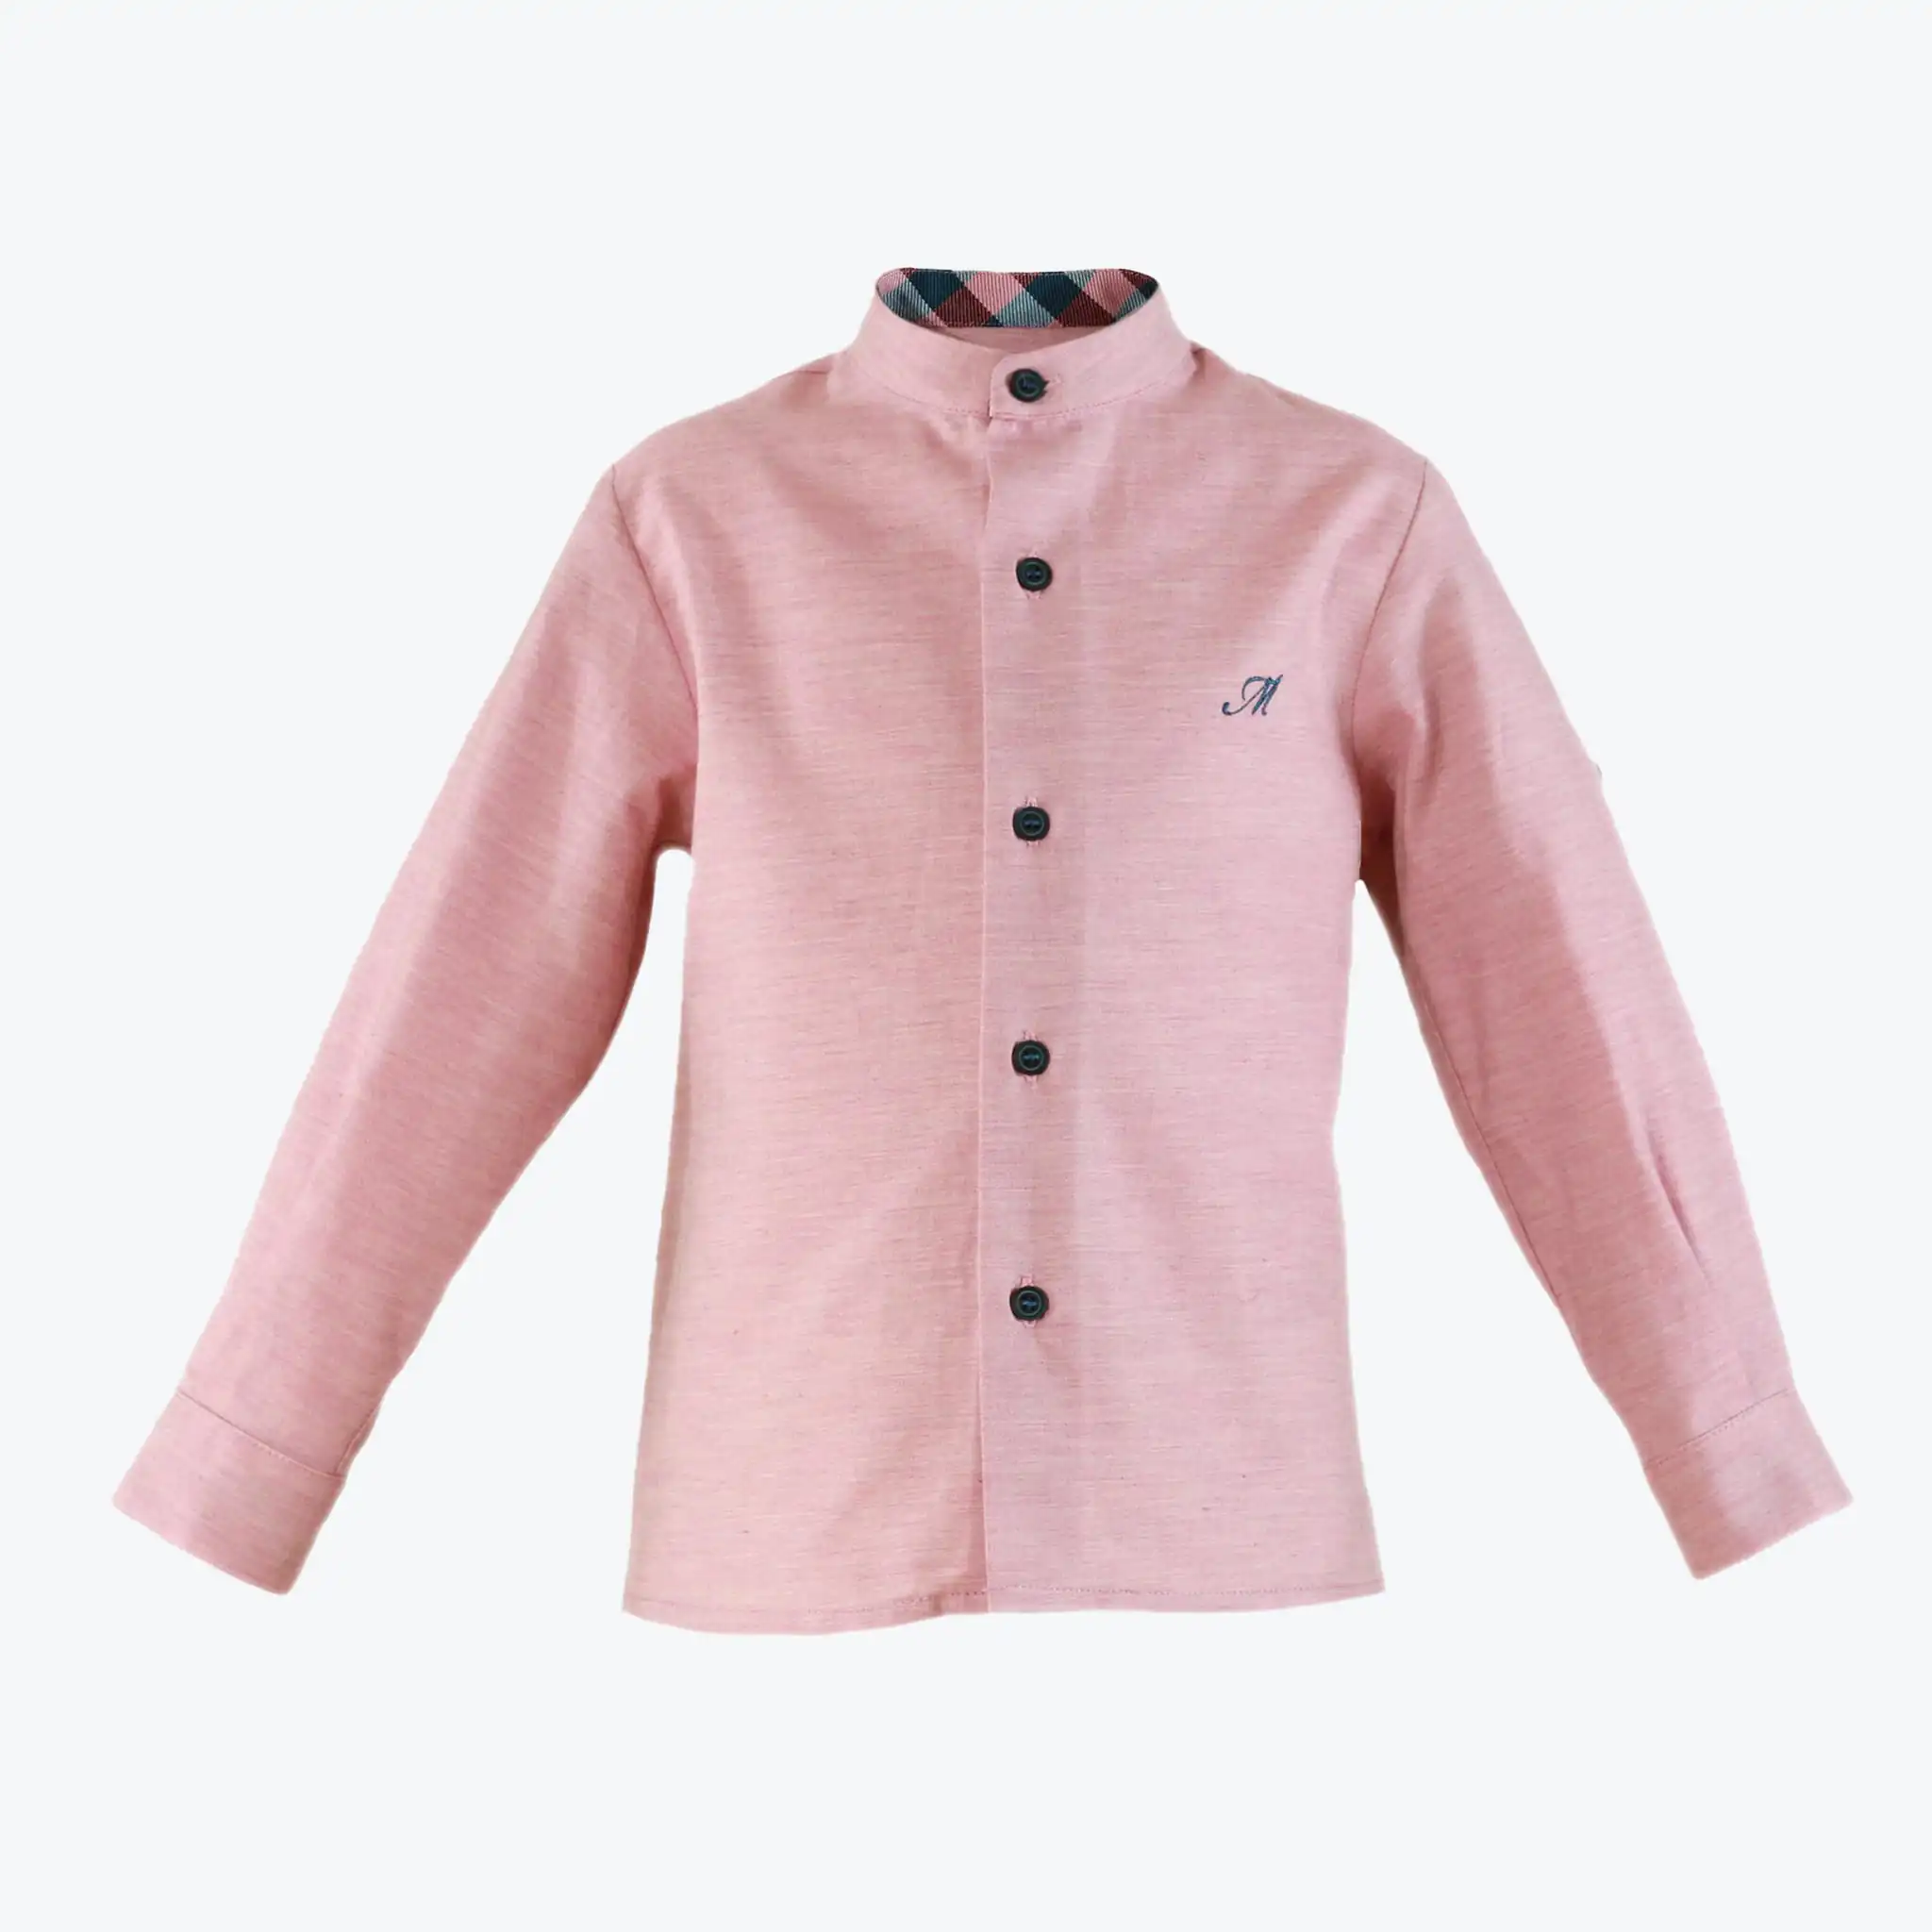 Boys Pink Cotton Dress Shirt